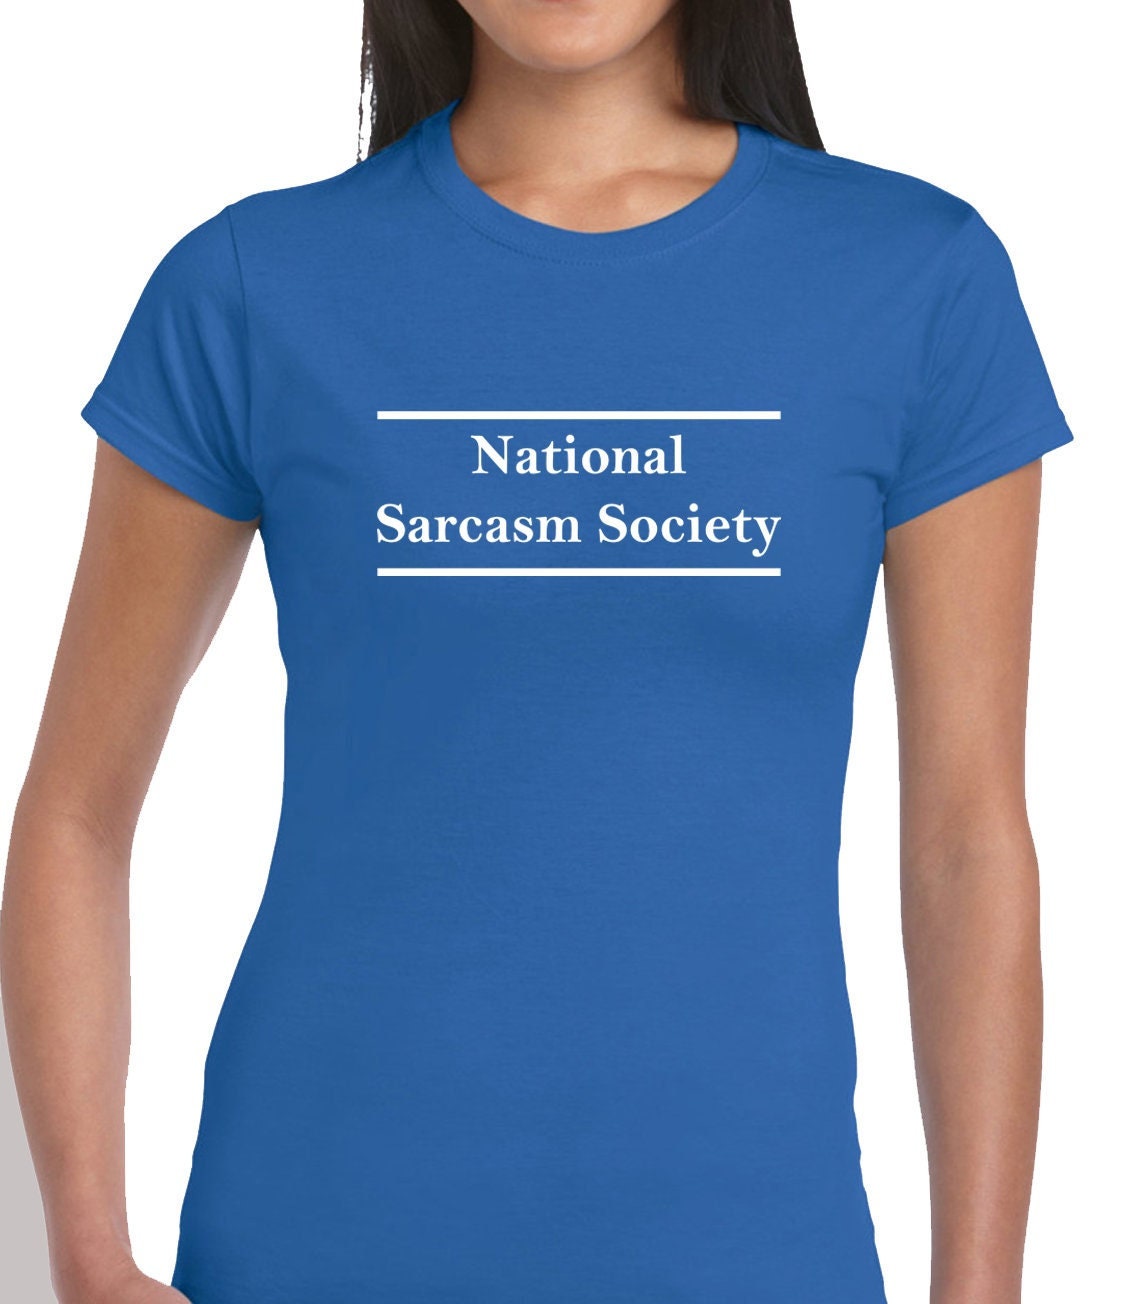 Discover National sarcasm society funny T-Shirt